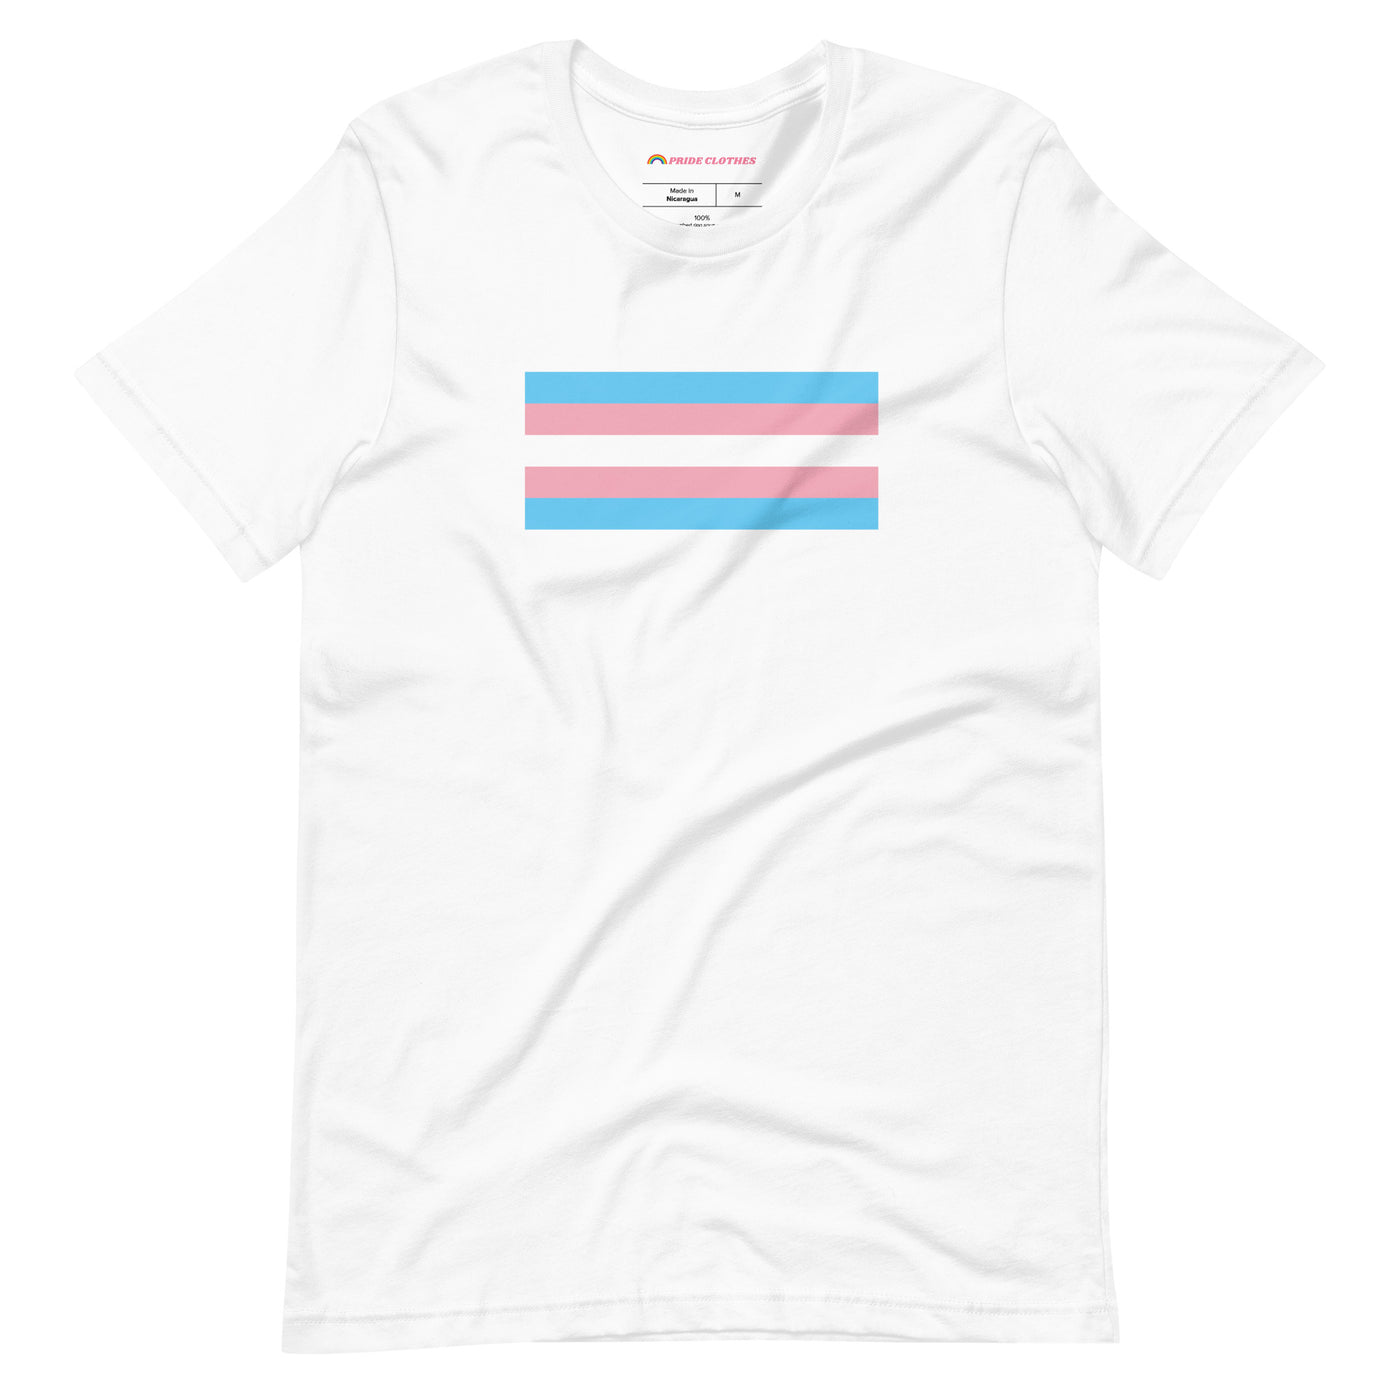 PrideClothes - Transgender Pride Flag T-Shirt - White